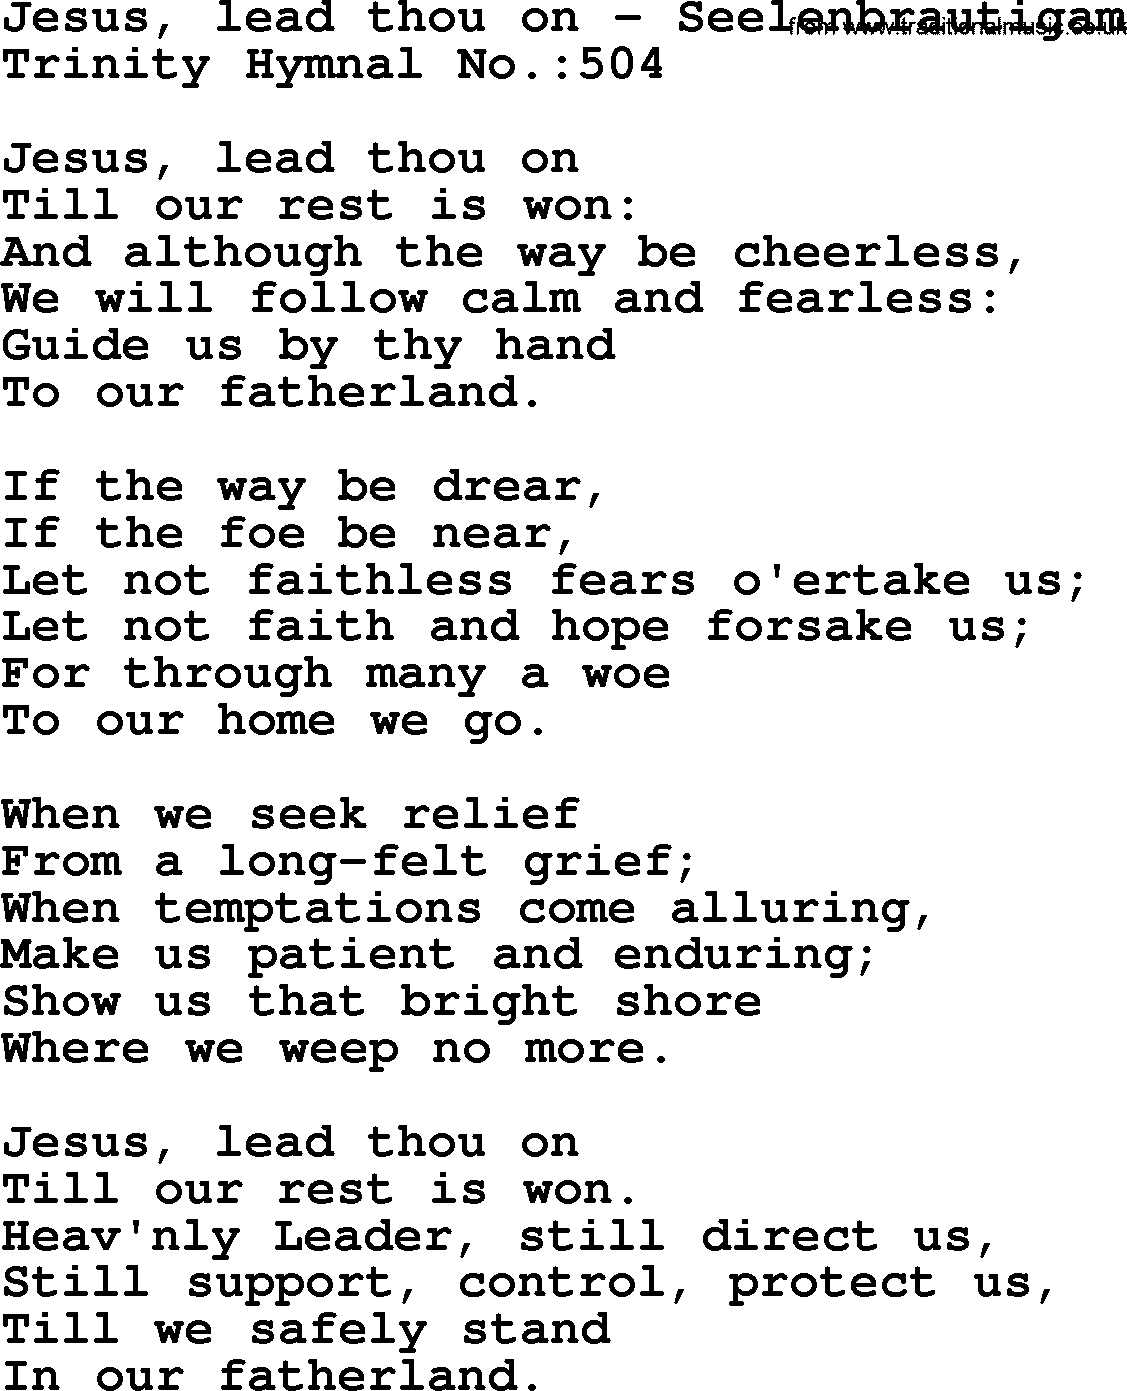 Trinity Hymnal Hymn: Jesus, Lead Thou On--Seelenbrautigam, lyrics with midi music